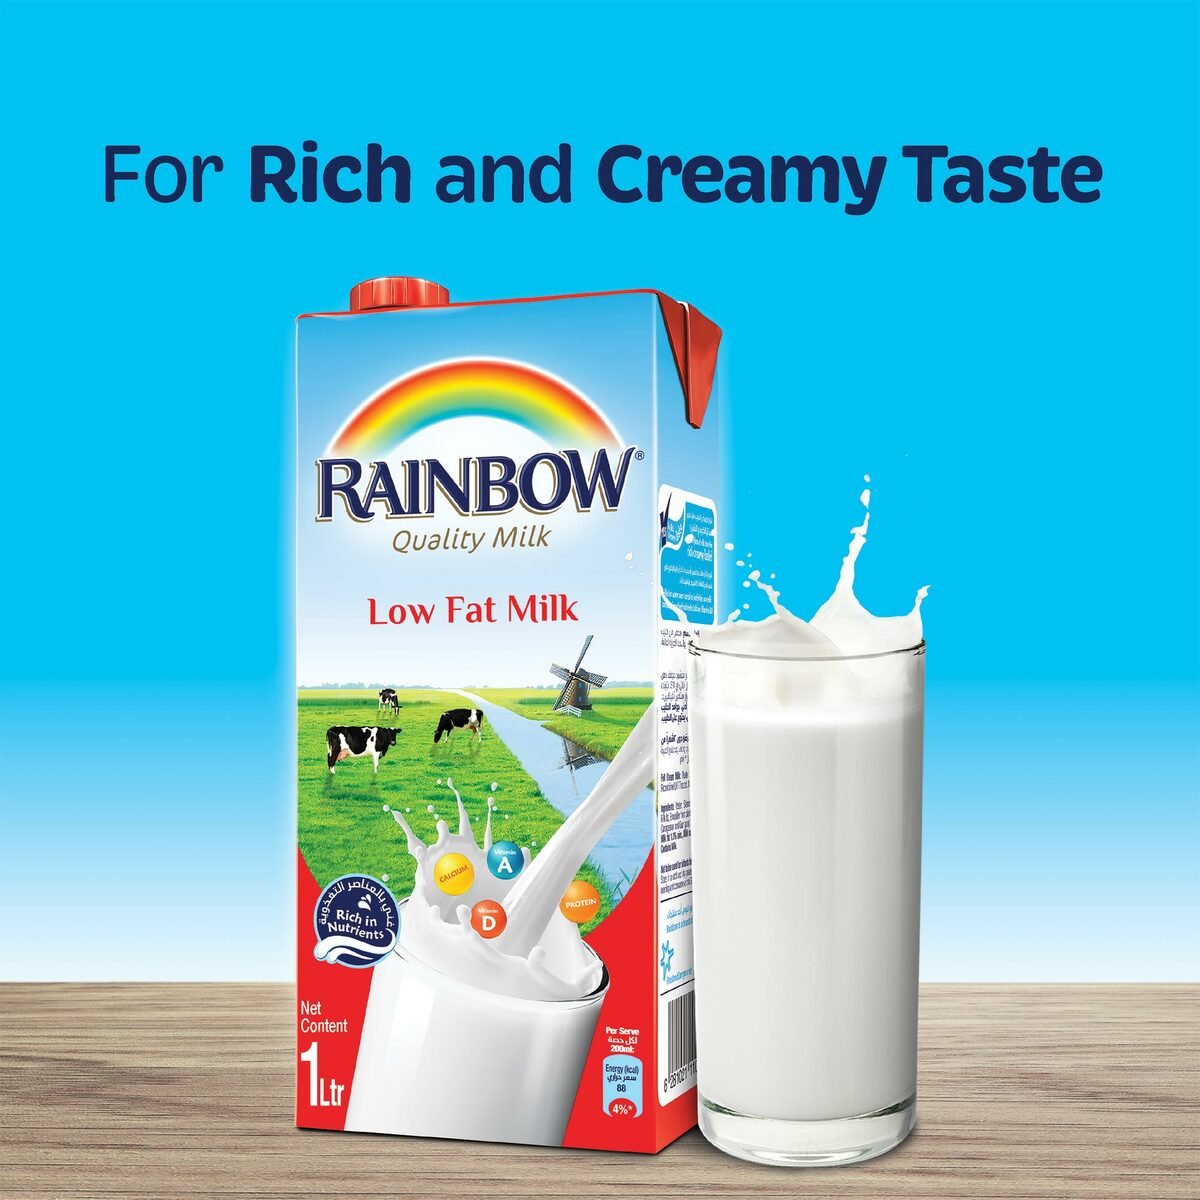 Rainbow UHT Milk Low Fat 1 Litre